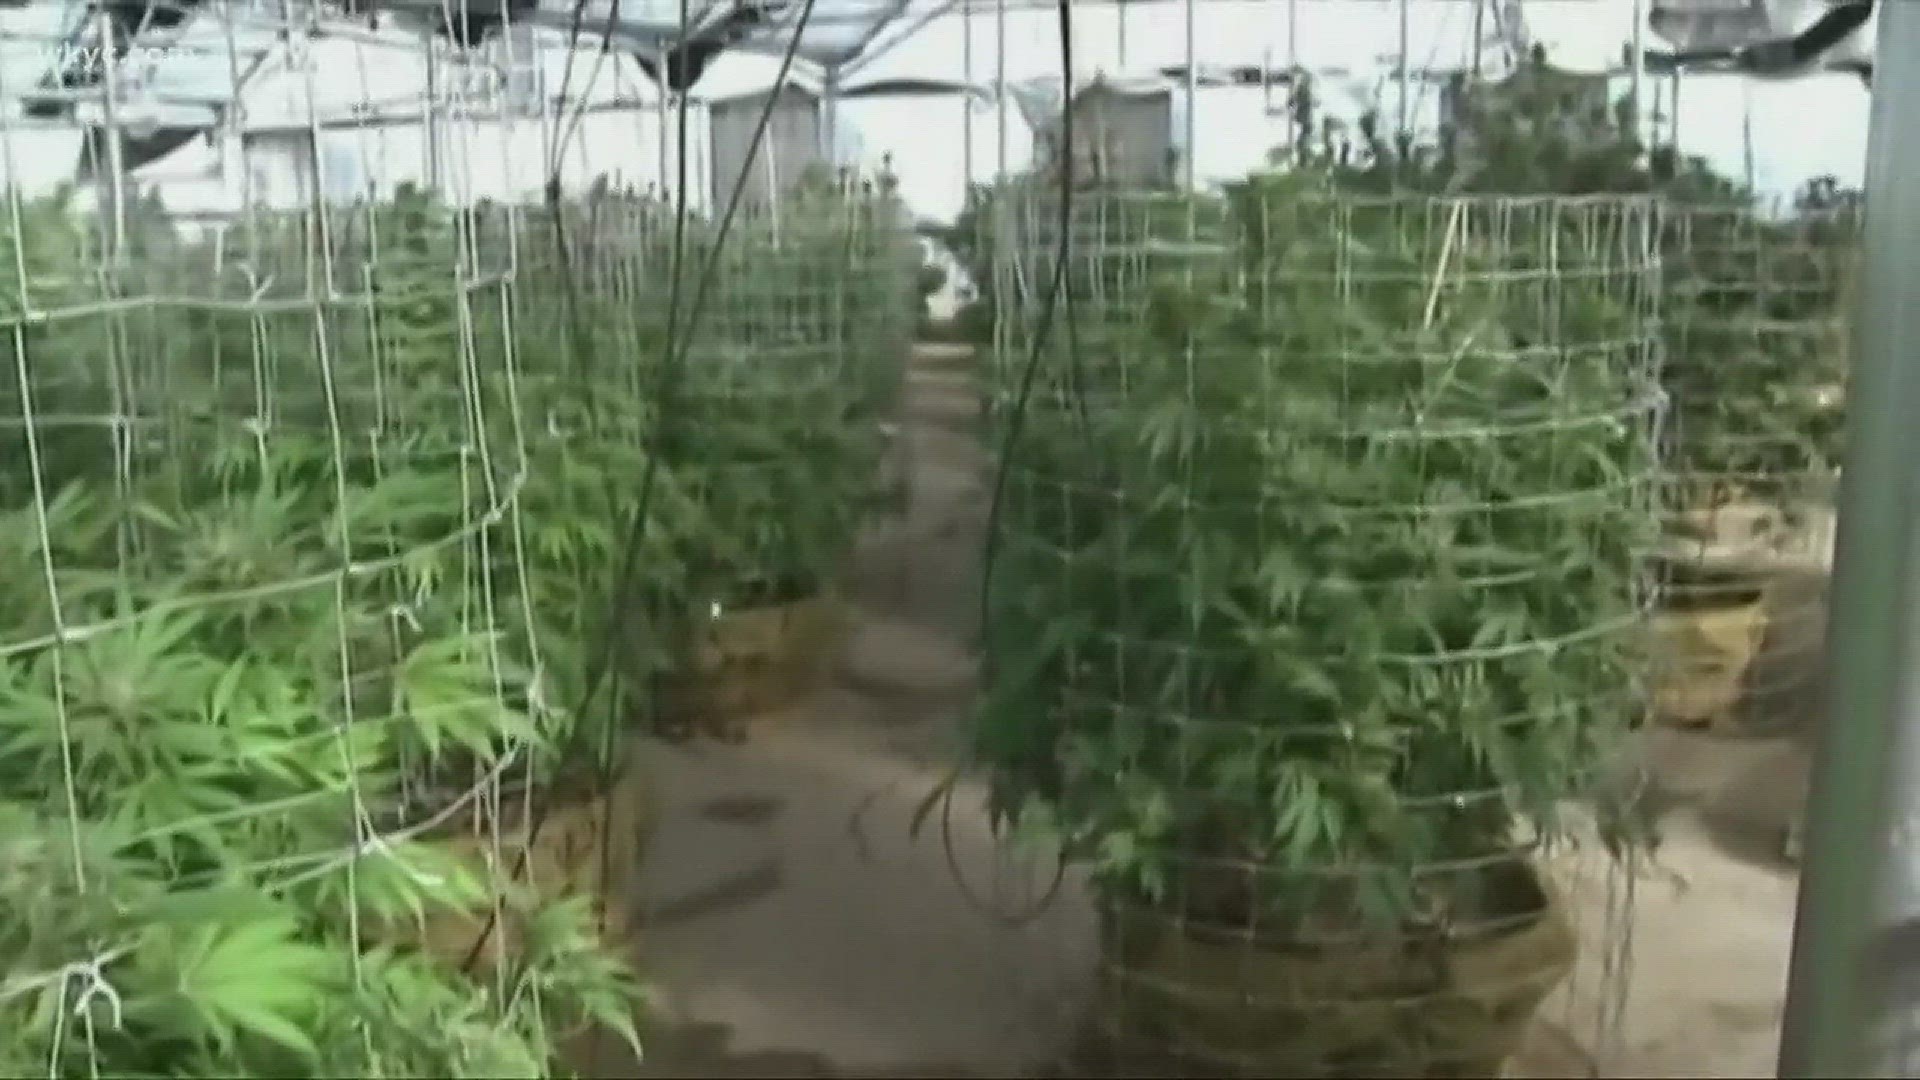 Companies in ohio can now grow medical marijuana